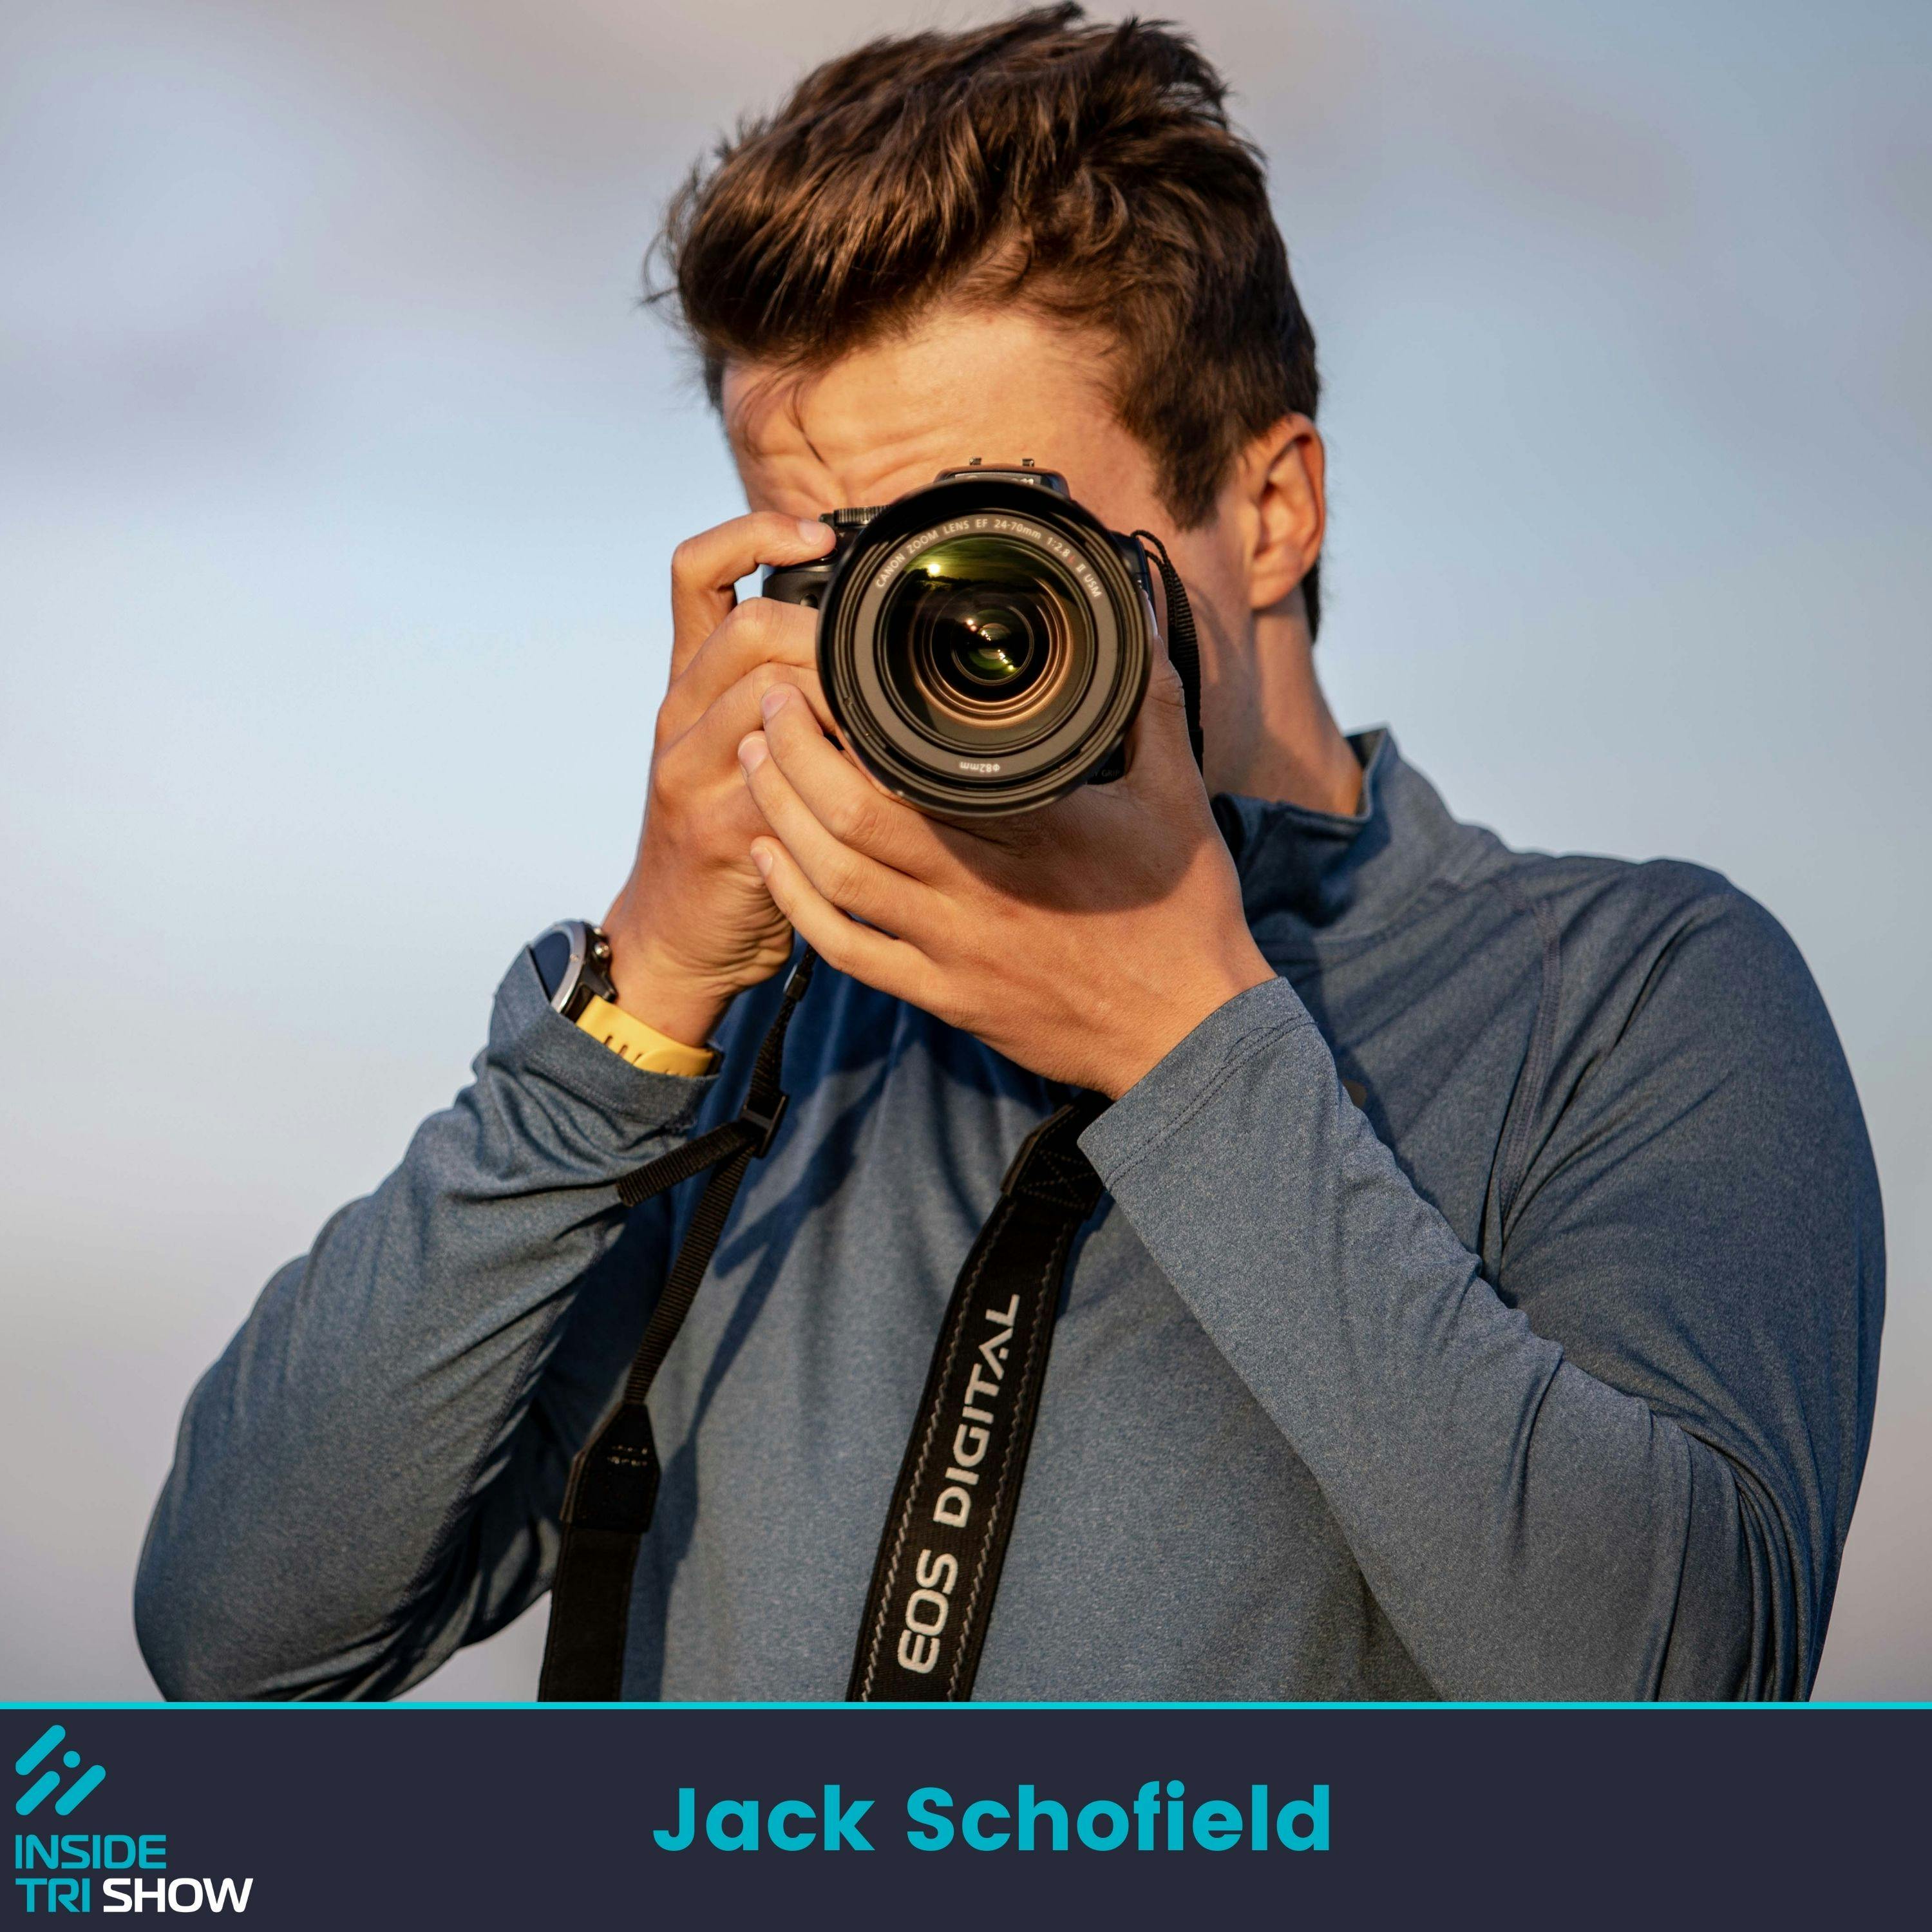 Jack Schofield - the triathlete who photographs triathlon superstars